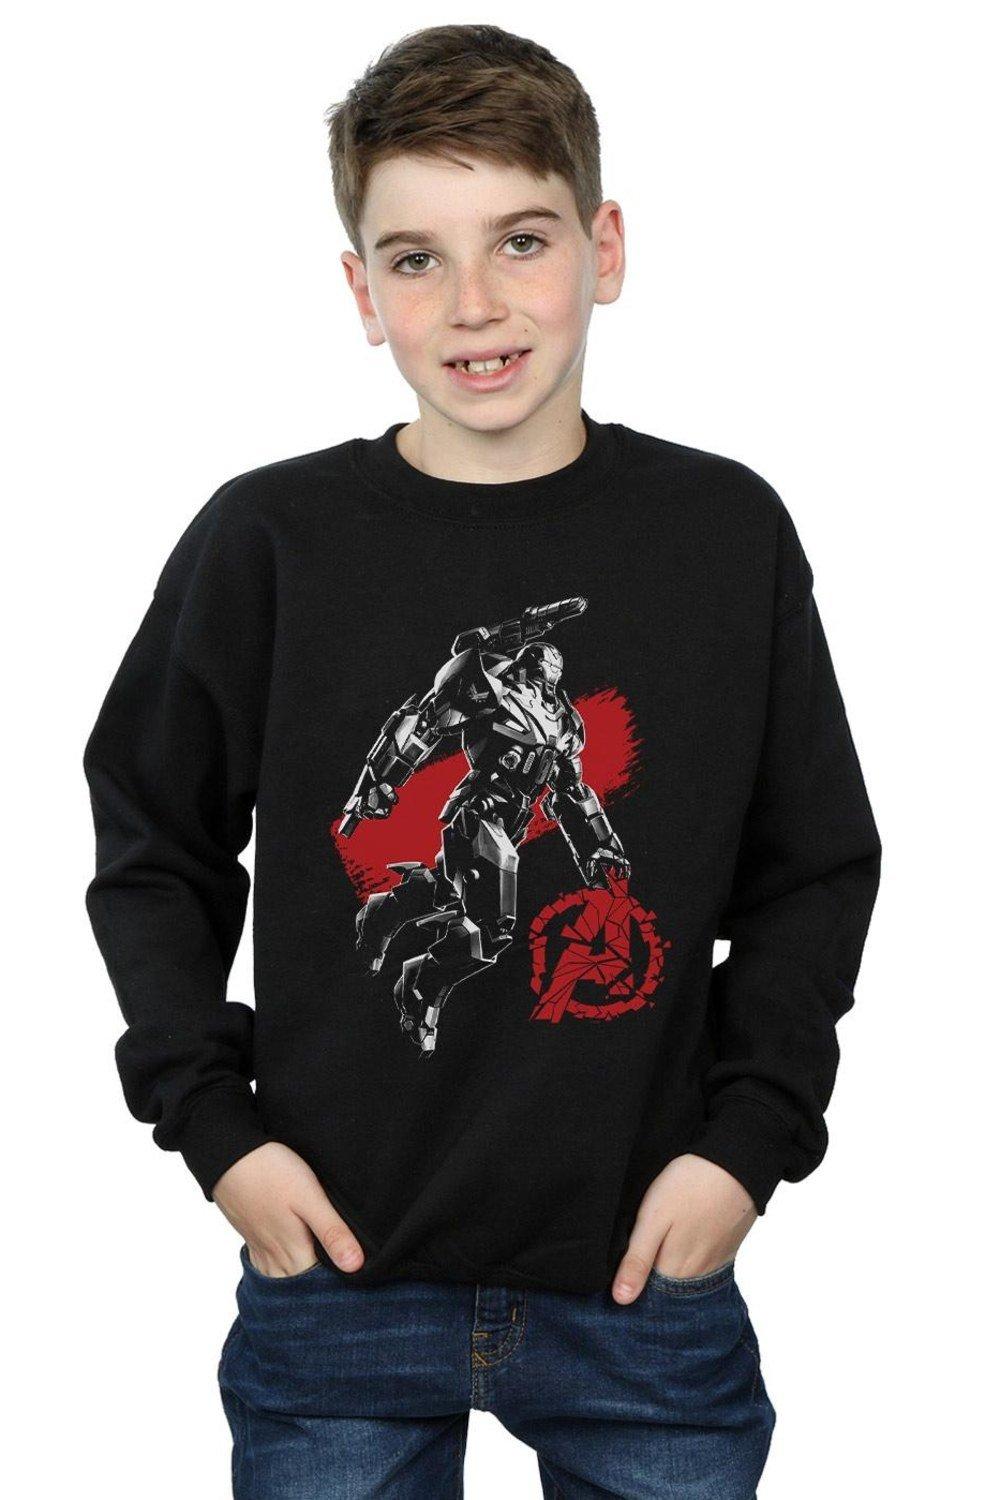 Avengers Endgame Mono War Machine Sweatshirt